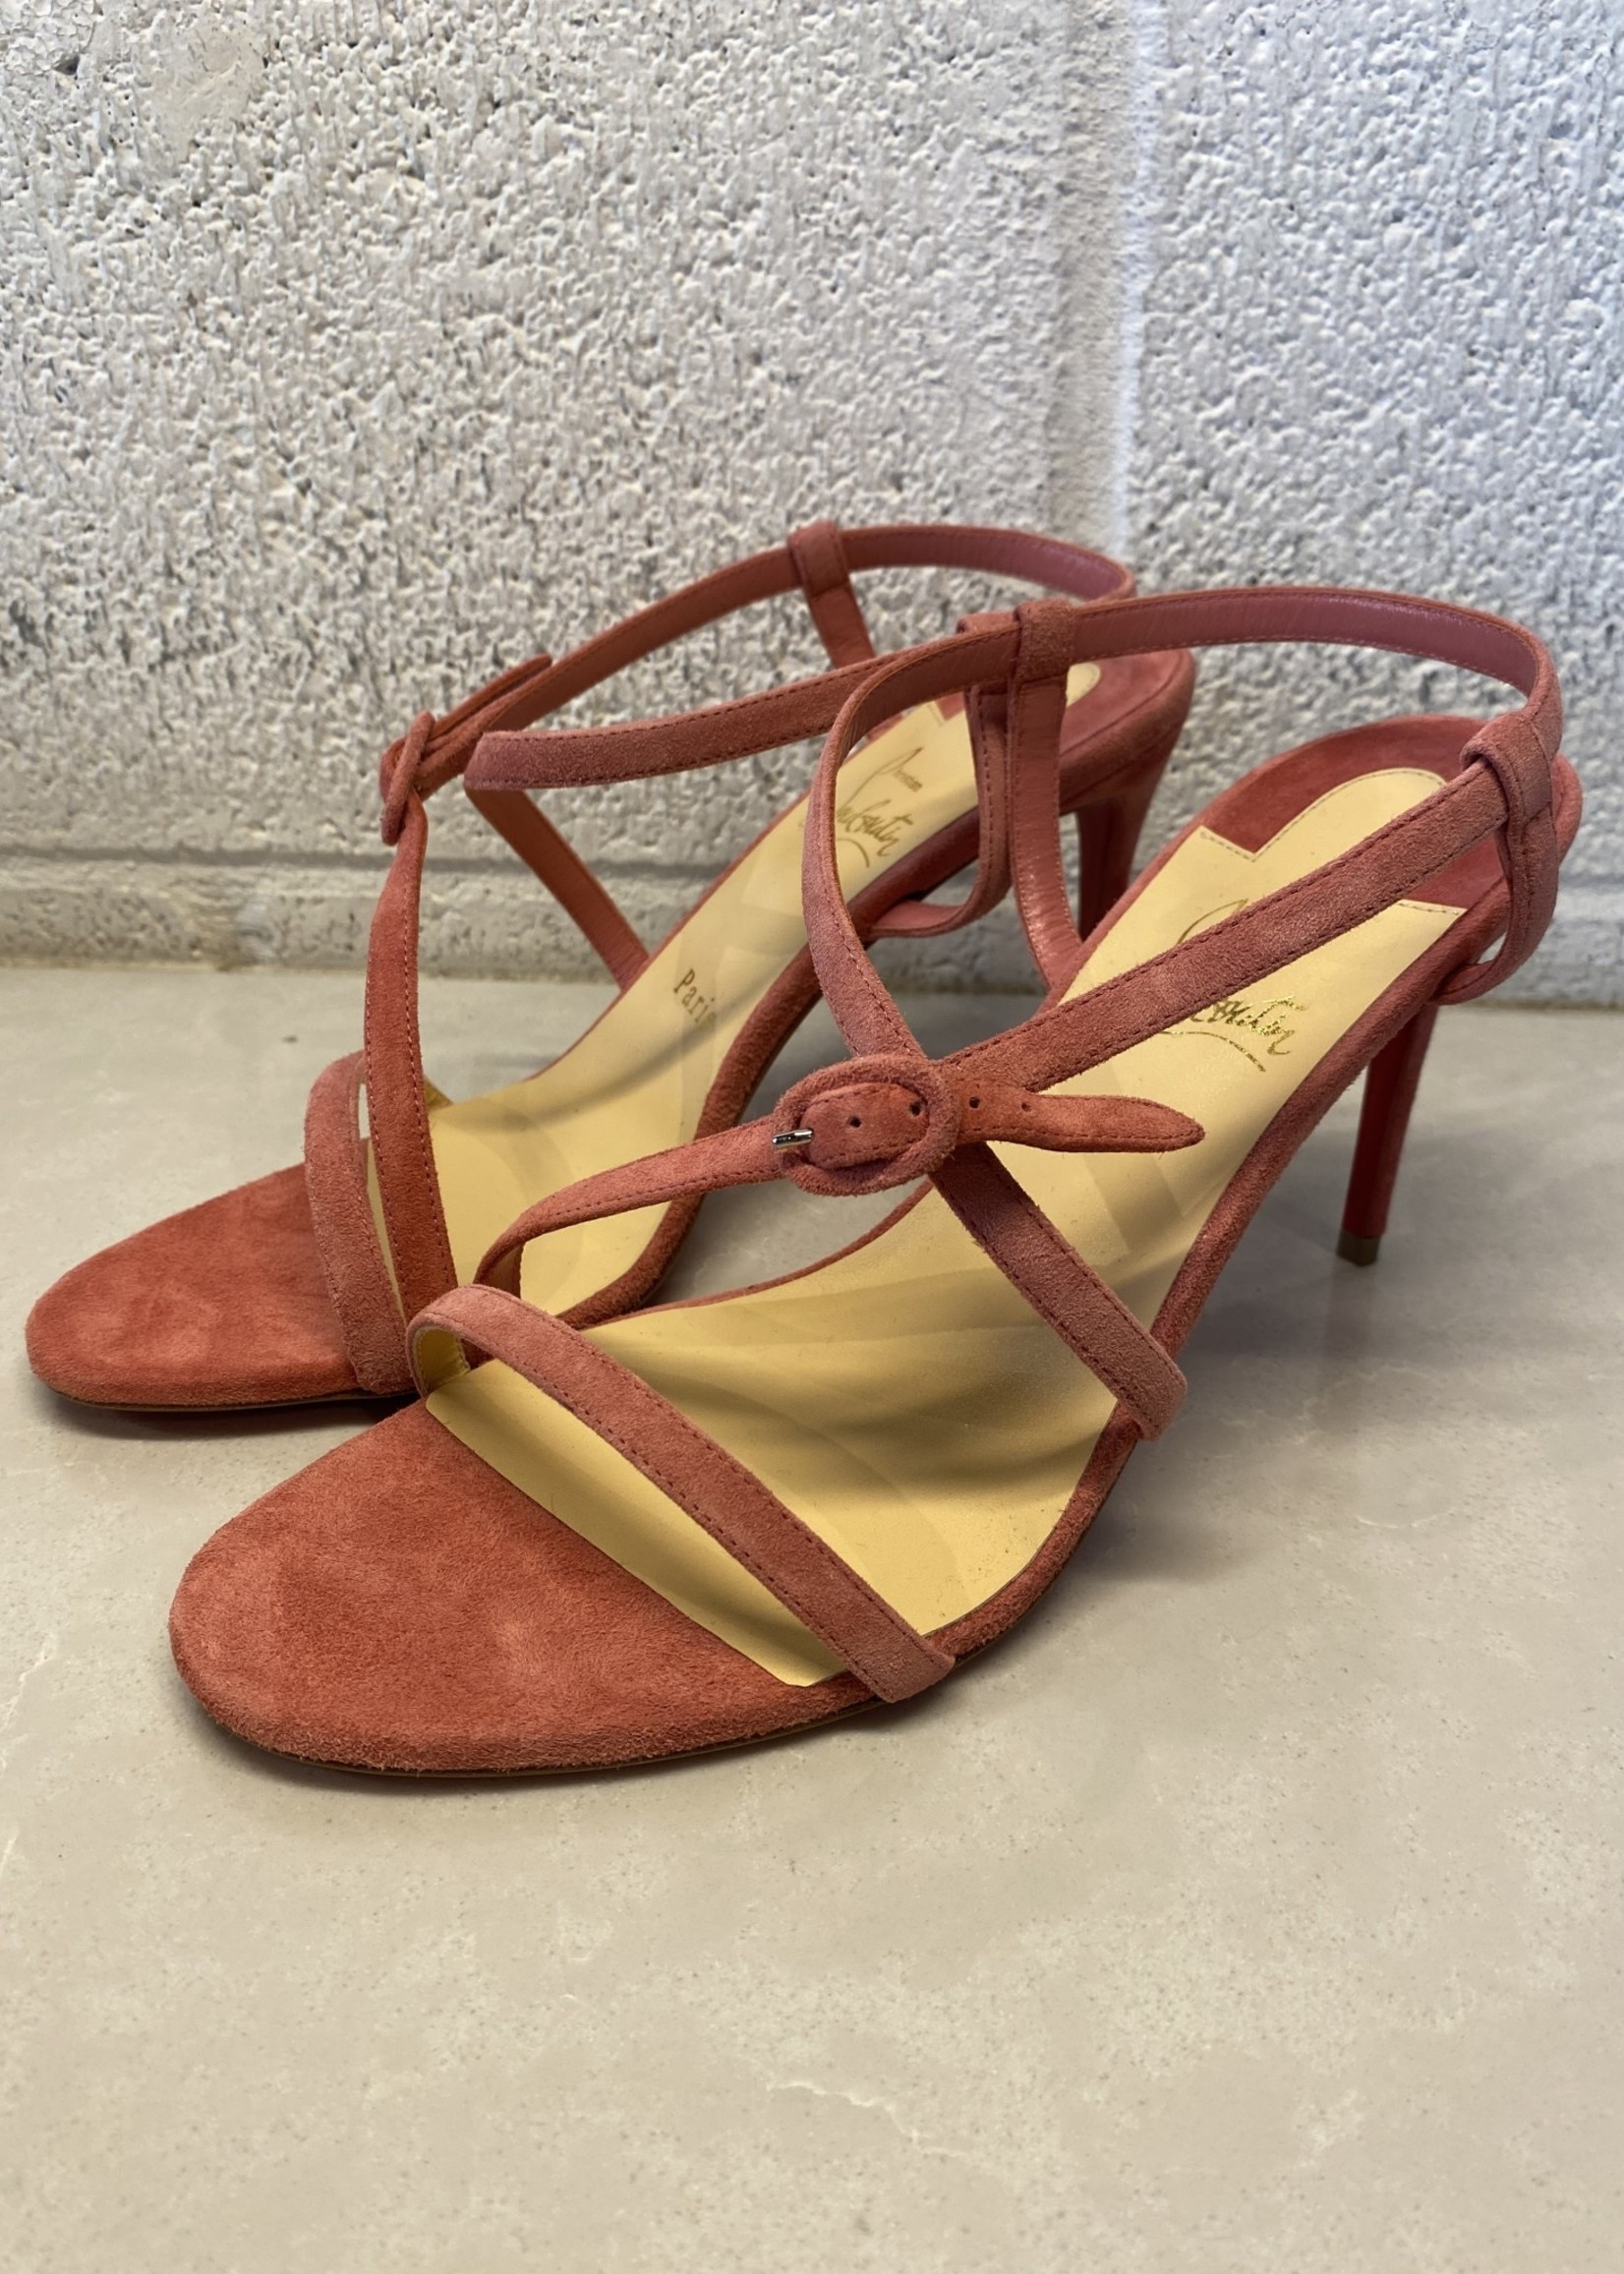 Christian Louboutin 'Selima' Pink Heels (Retail: $795) 38